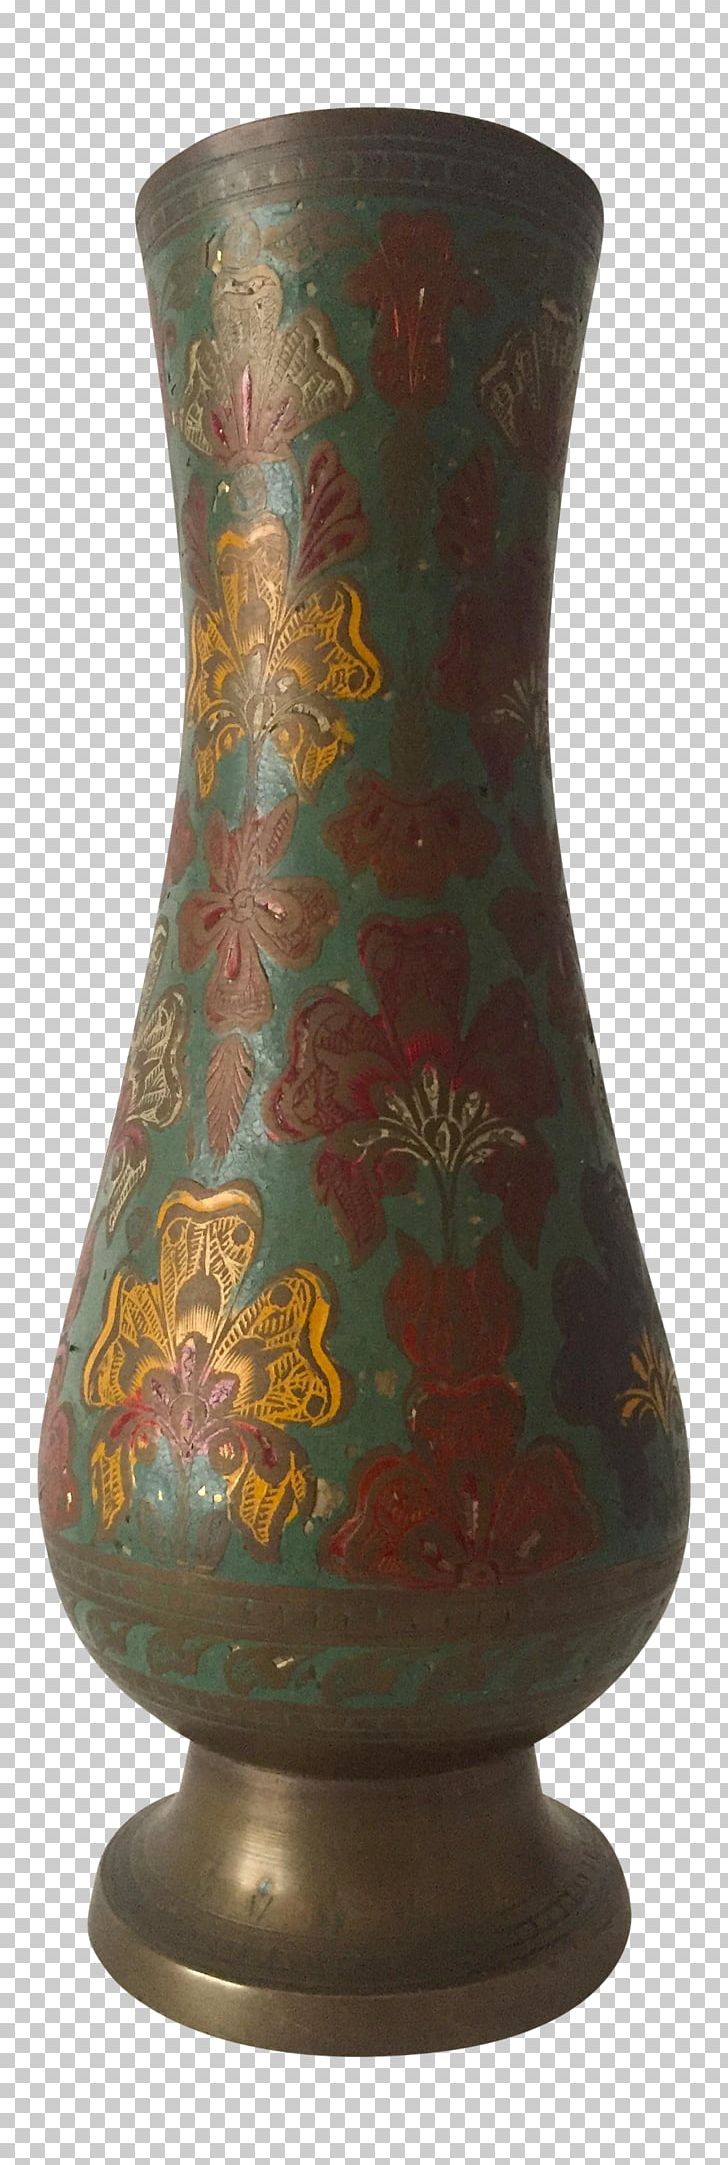 Vase Ceramic Artifact Pottery Urn PNG, Clipart, Antique, Artifact, Ceramic, Flowers, Pottery Free PNG Download